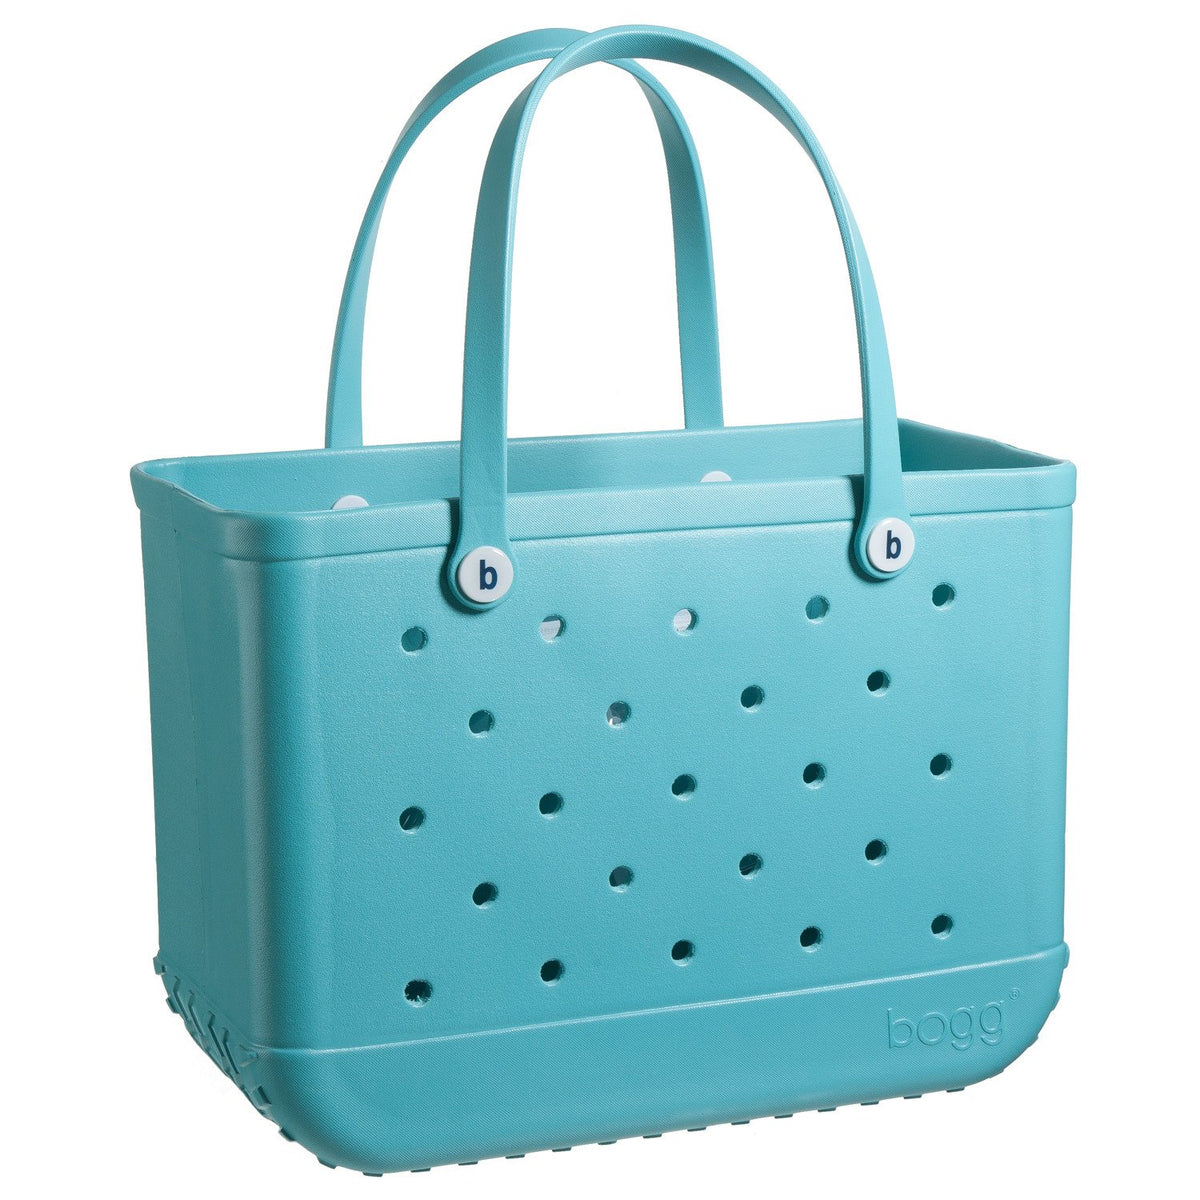 Original Bogg Bag in Turquoise